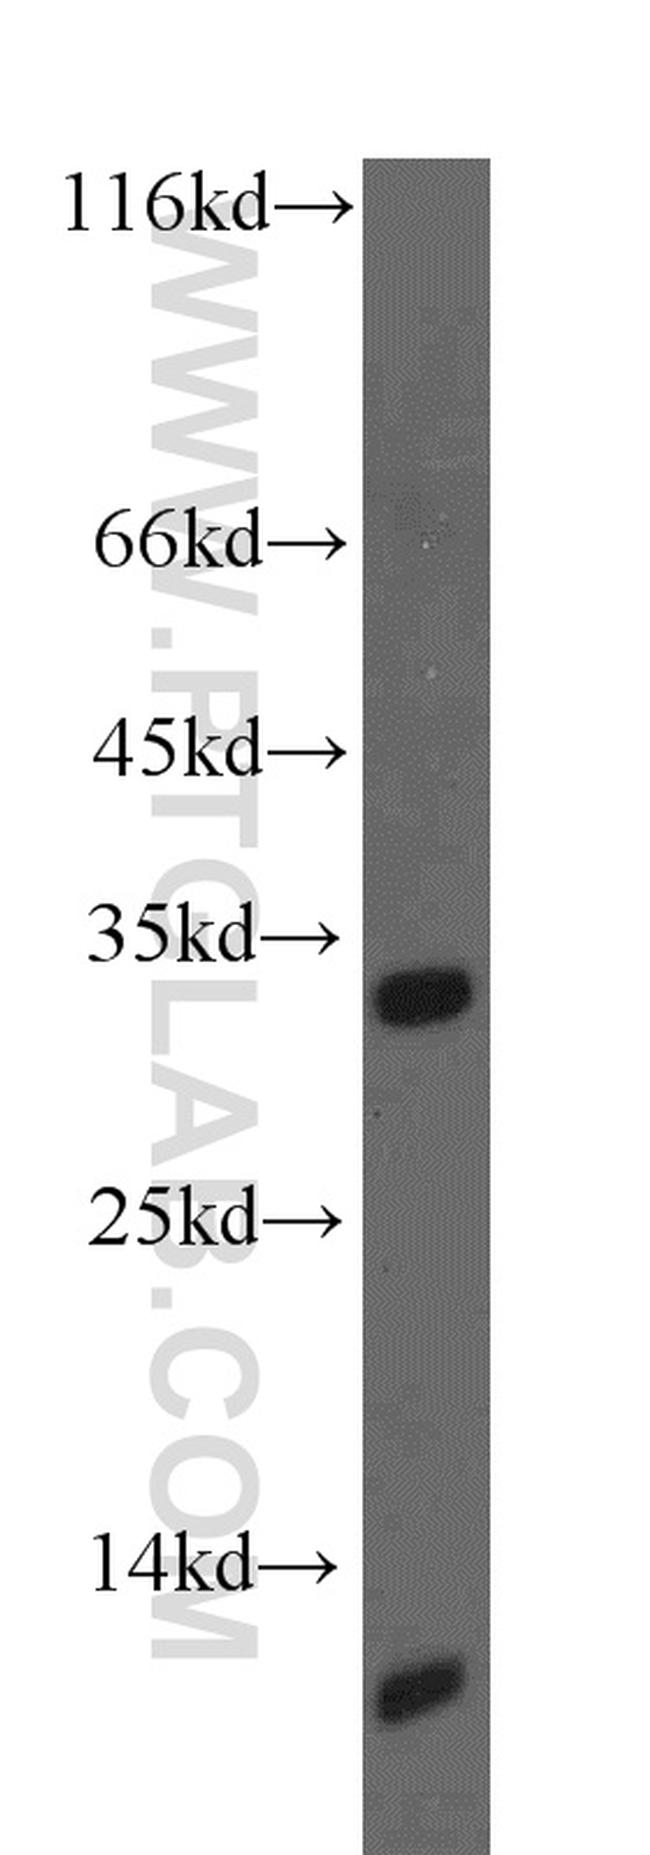 ACYP2 Antibody in Western Blot (WB)